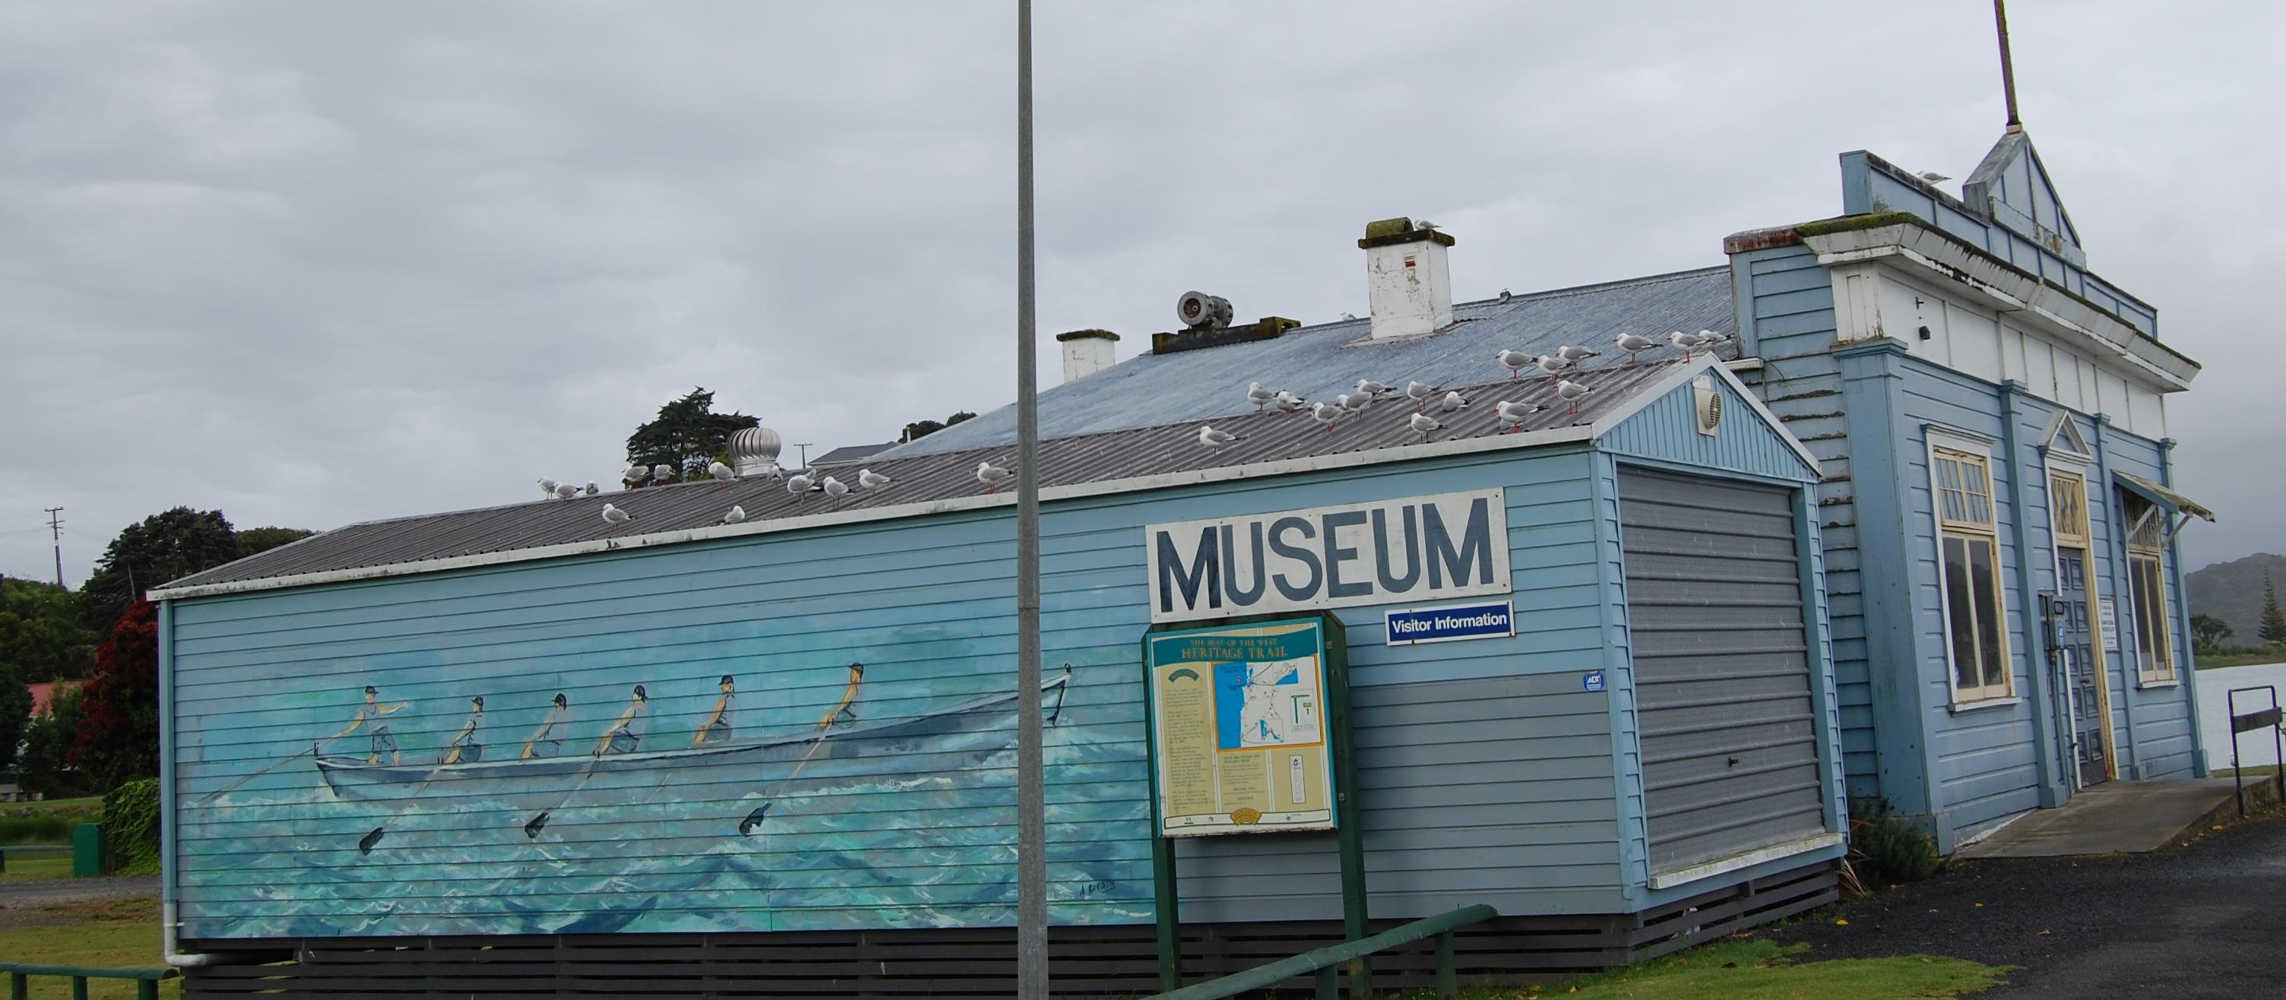 Kāwhia museum, Waikato, New Zealand @Pharmacy Today